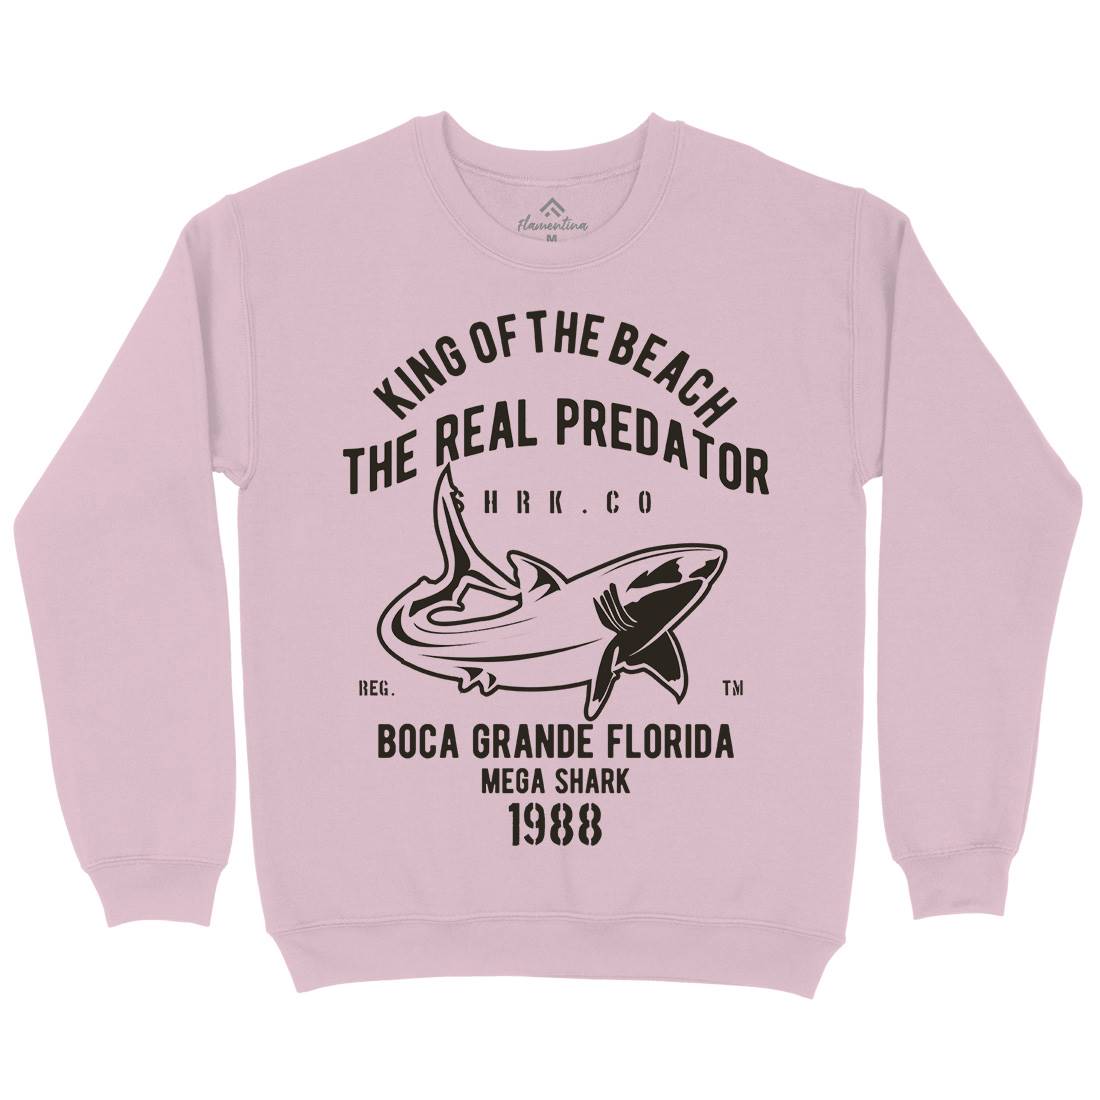 Shark Real Predator Kids Crew Neck Sweatshirt Navy B253